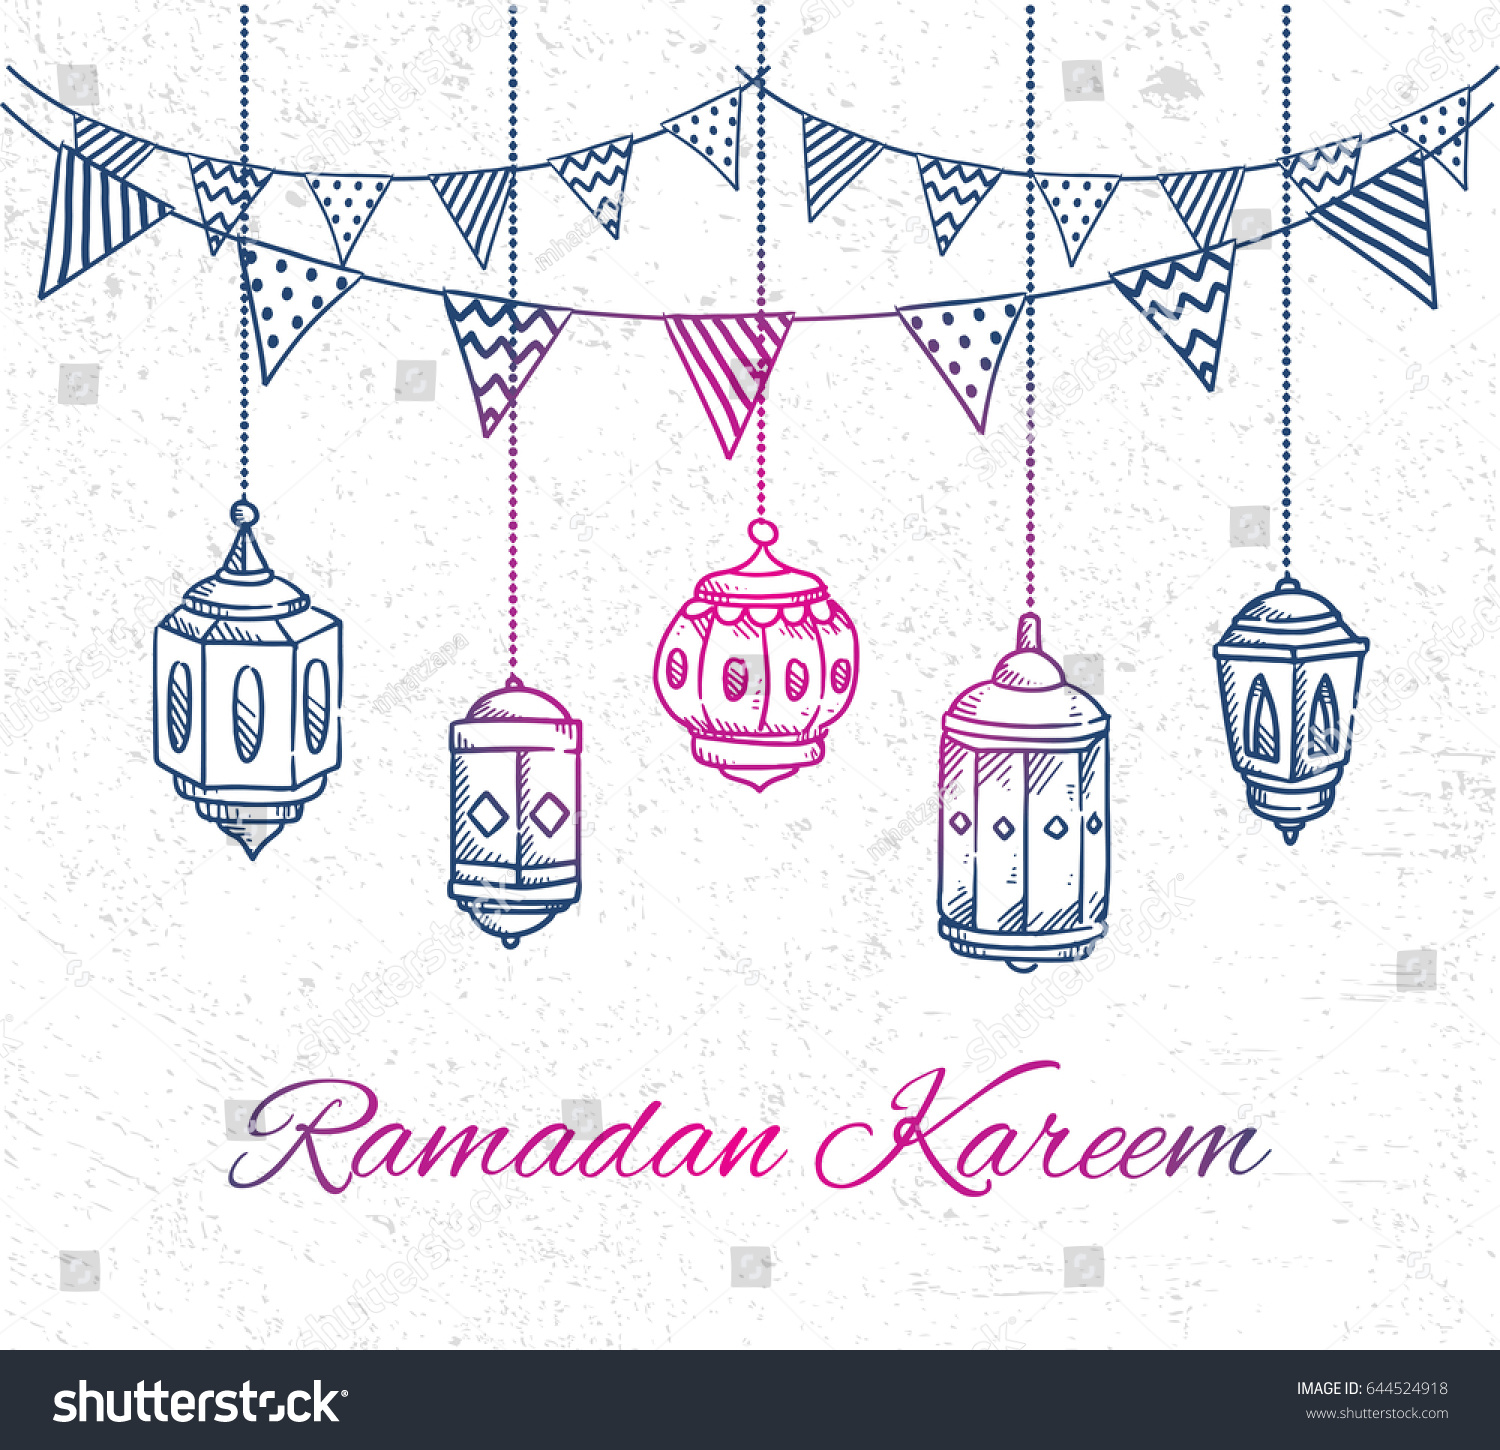 Ramadan greeting card with hand drawn lantern and bunting flag on grunge background #644524918